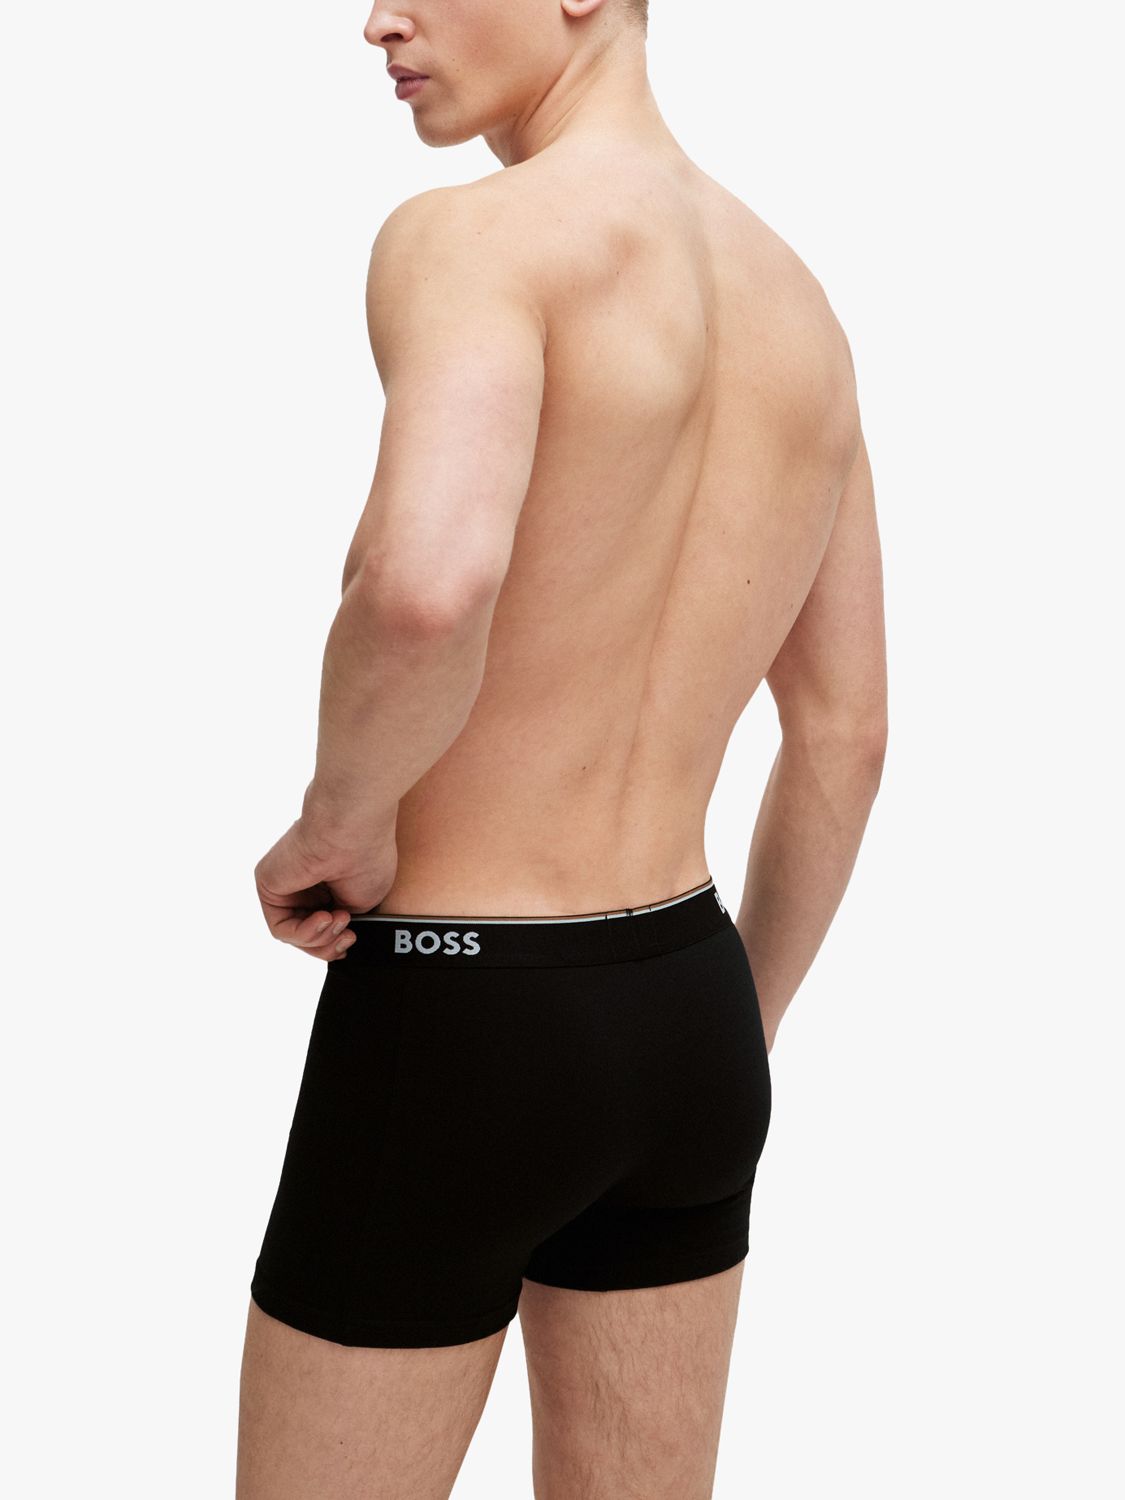 BOSS Logo Waist Cotton Stretch Boxer Shorts, Pack of 3, Beige/Multi, L